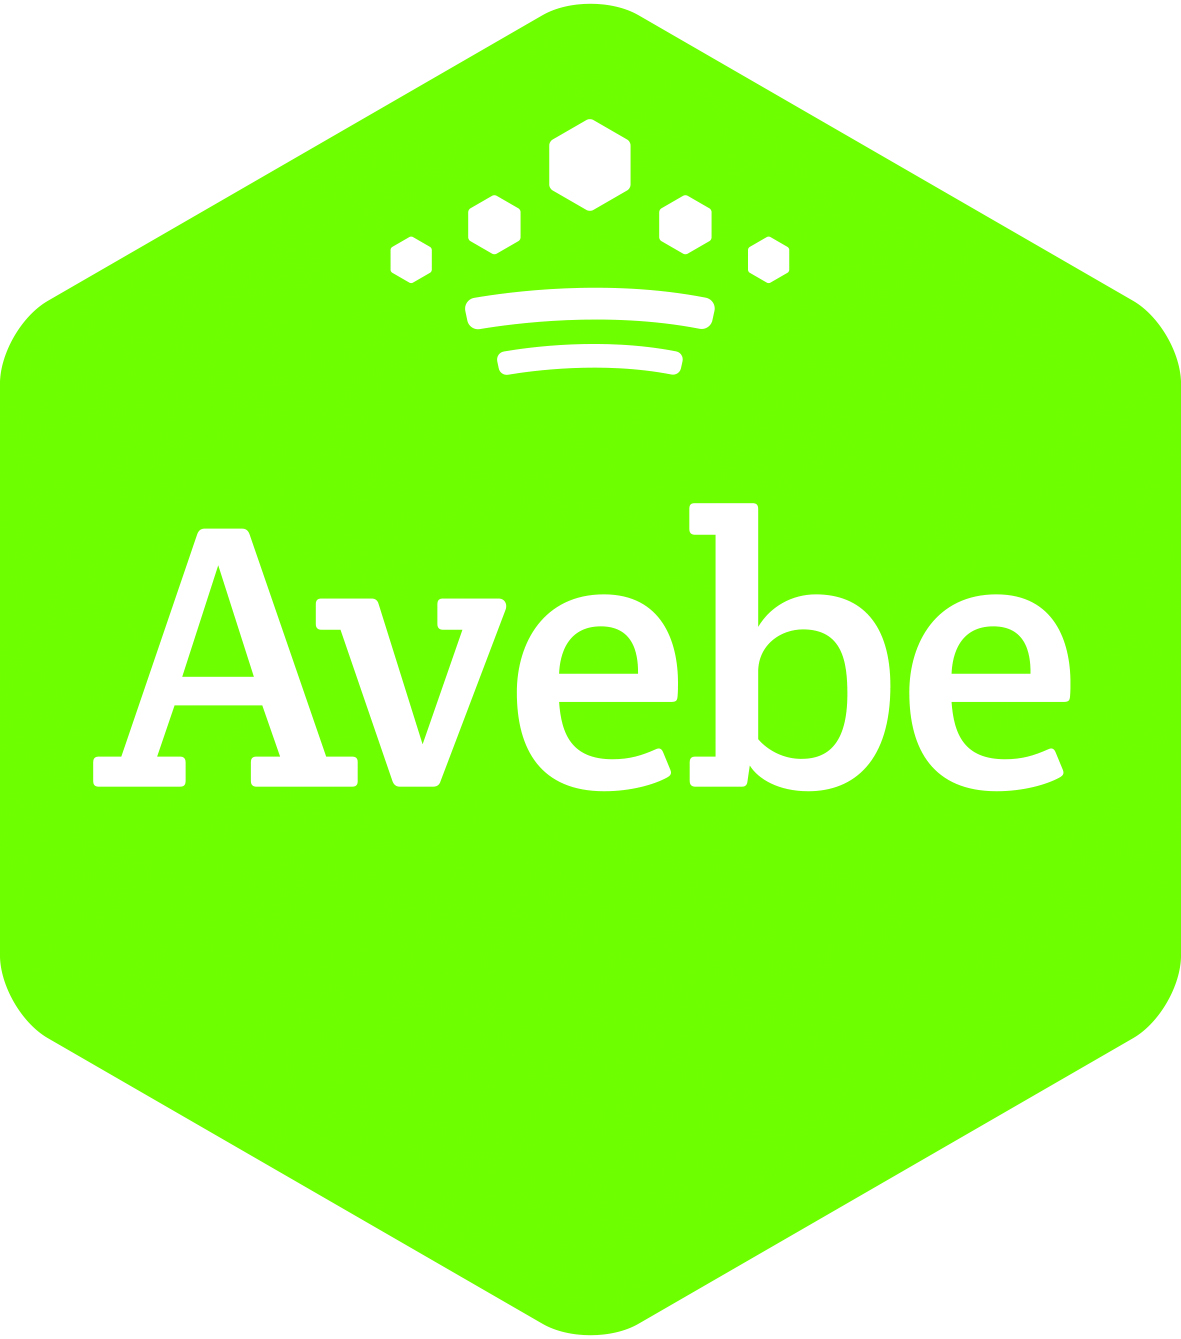 Royal Avebe - Food innovation